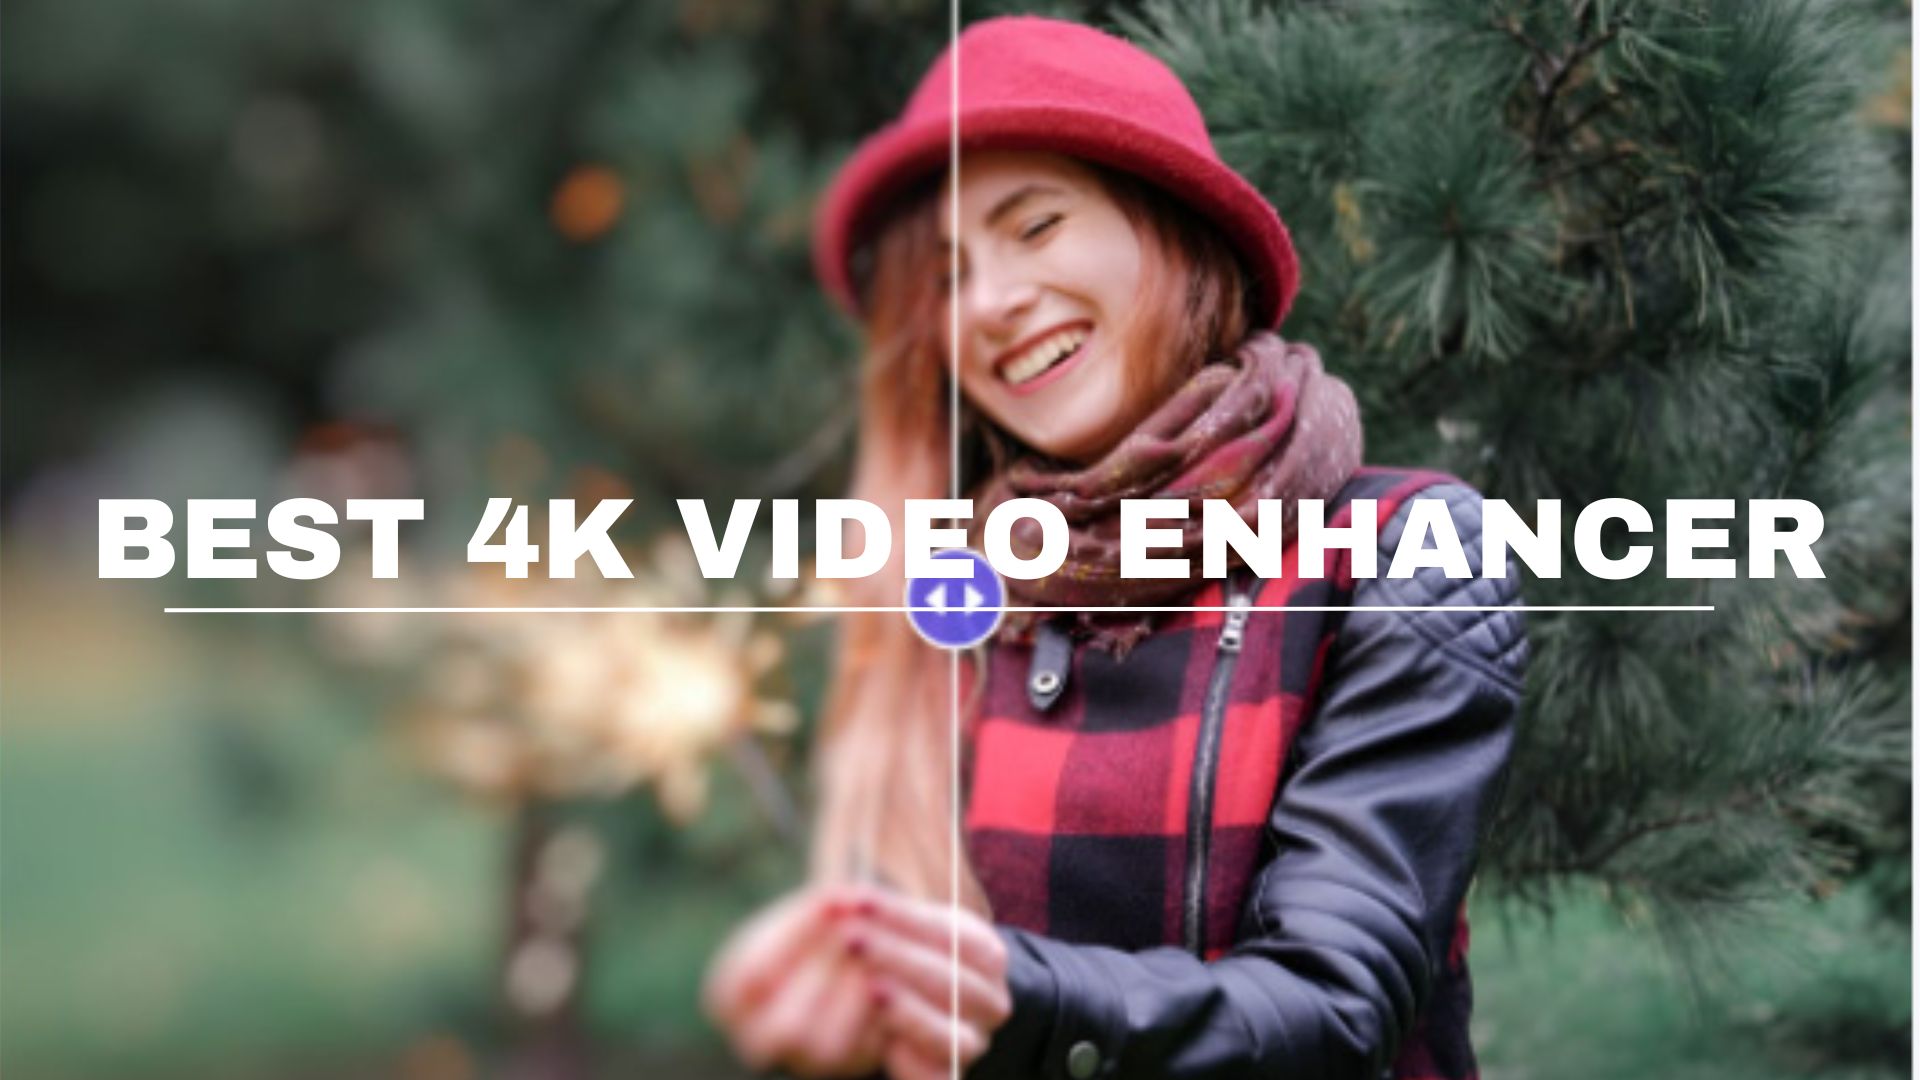 4k video enhancer